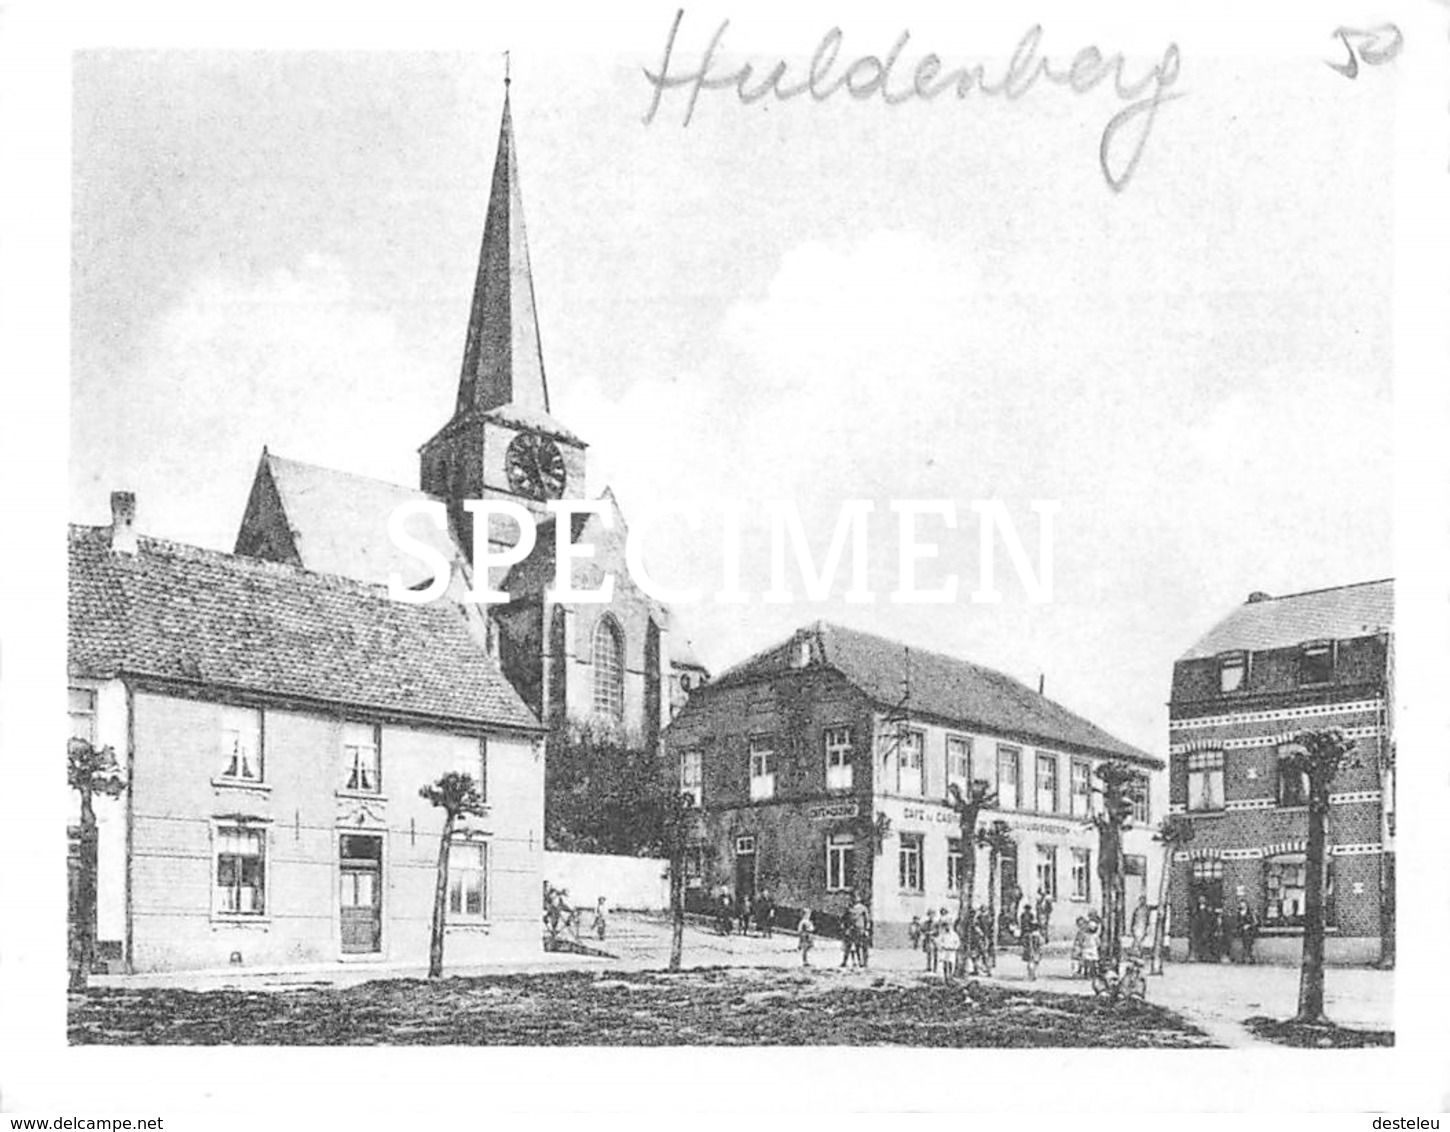 Prentje Ken Uw Land - Kerk En Casino - Huldenberg - Huldenberg